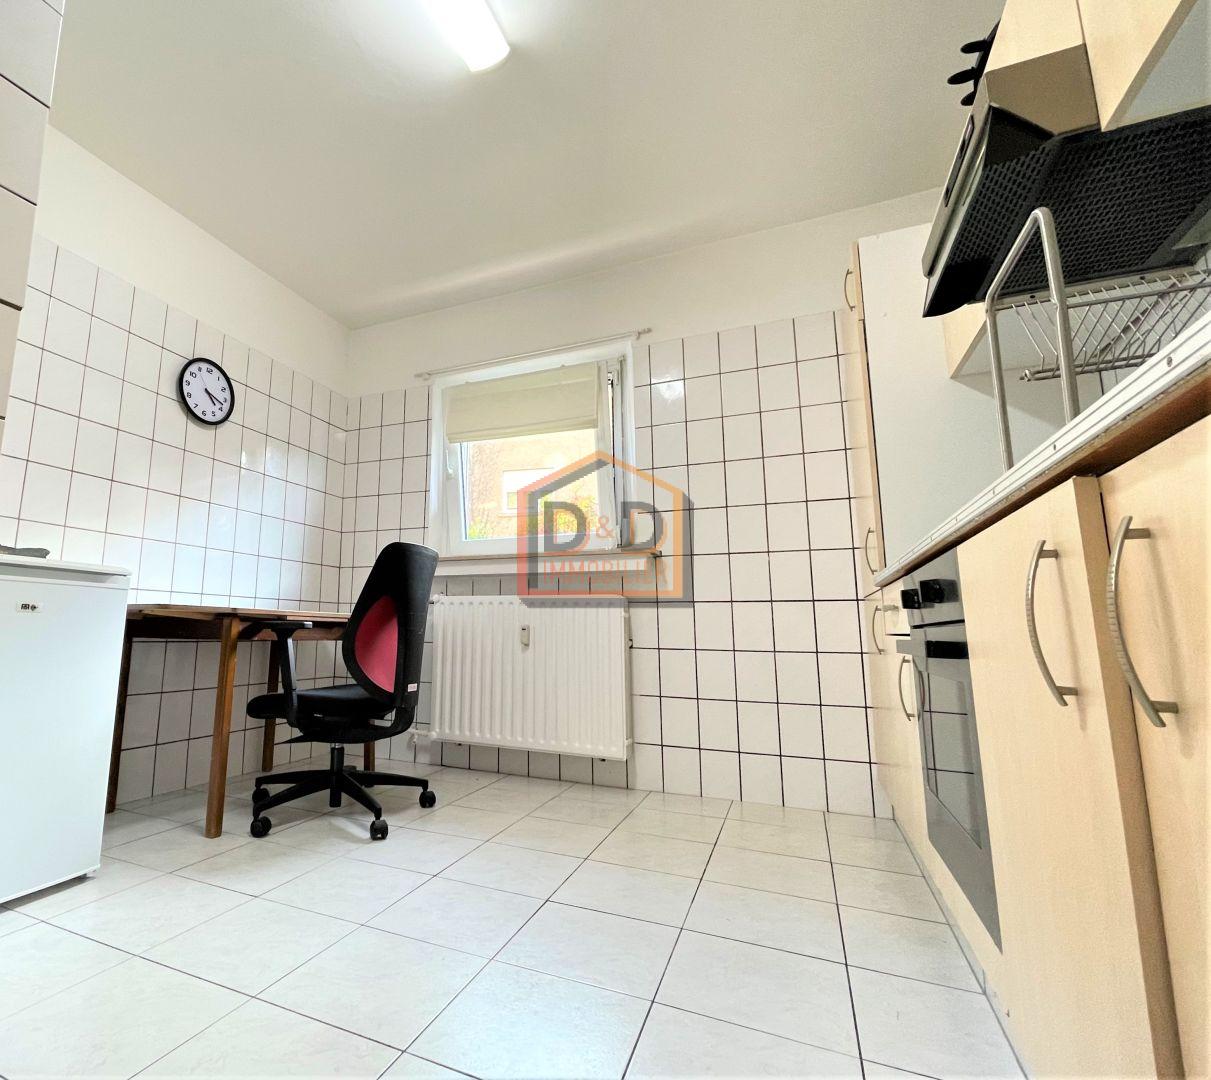 Appartement à Luxembourg-Rollingergrund, 30,13 m², 1 chambre, 1 salle de bain, 389 350 €